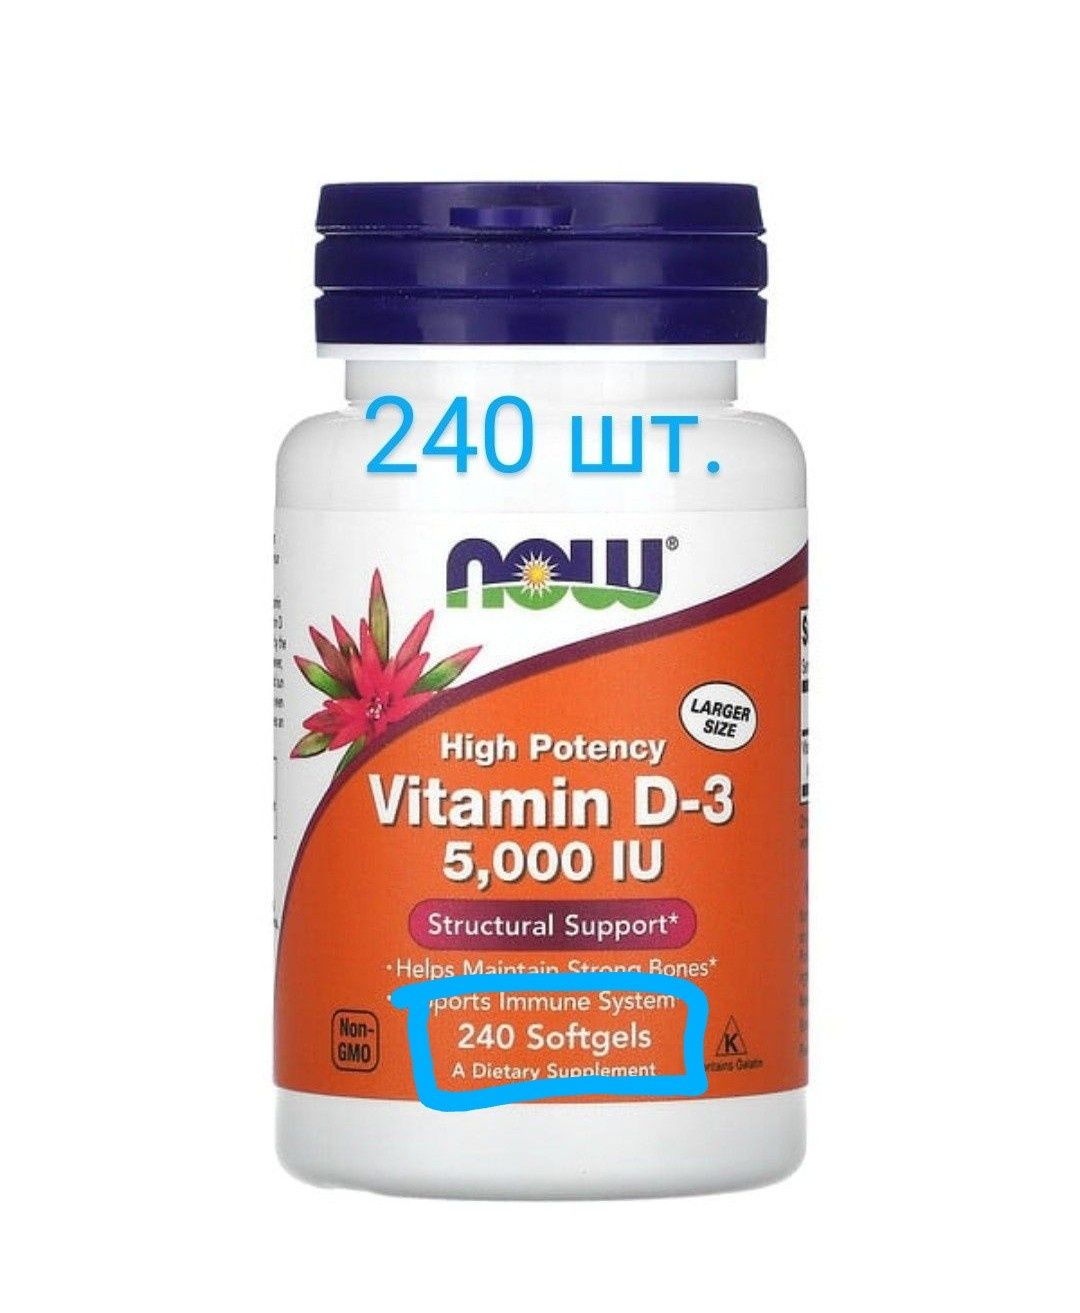 Витамин Д 3 витамин D - 3  5000 IU  240 шт. в упаковке -  8000 тн.